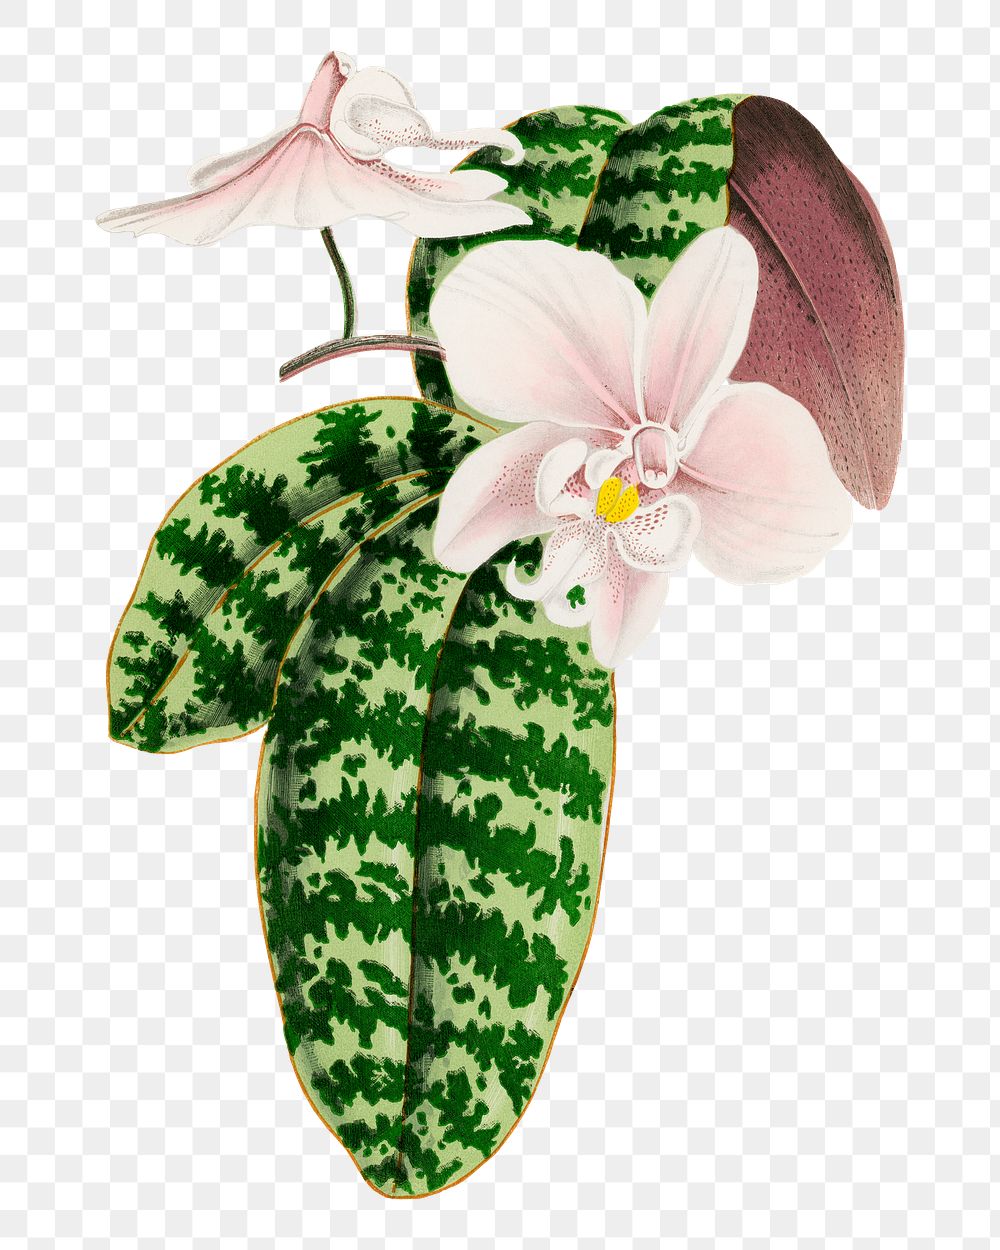 Pink orchid png sticker, aesthetic floral illustration on transparent background